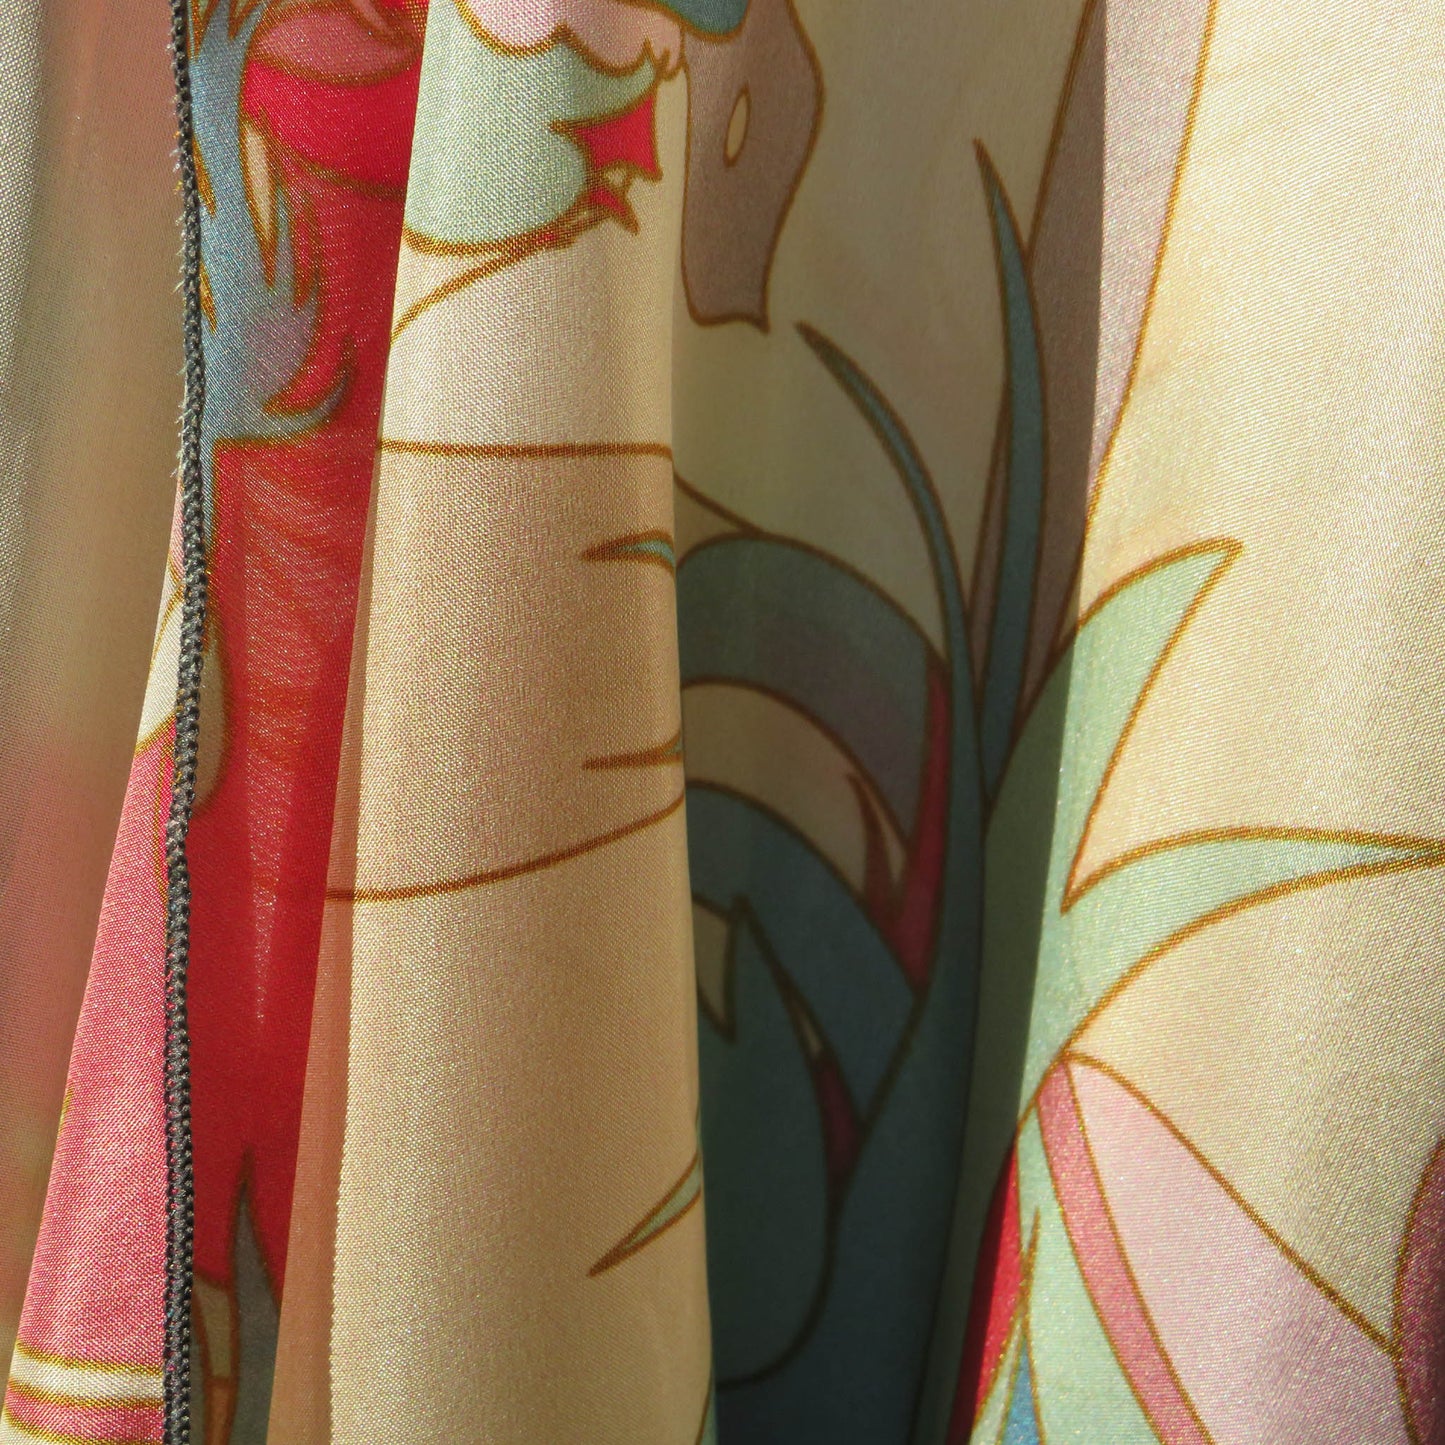 Kimono - Summertime Teacup